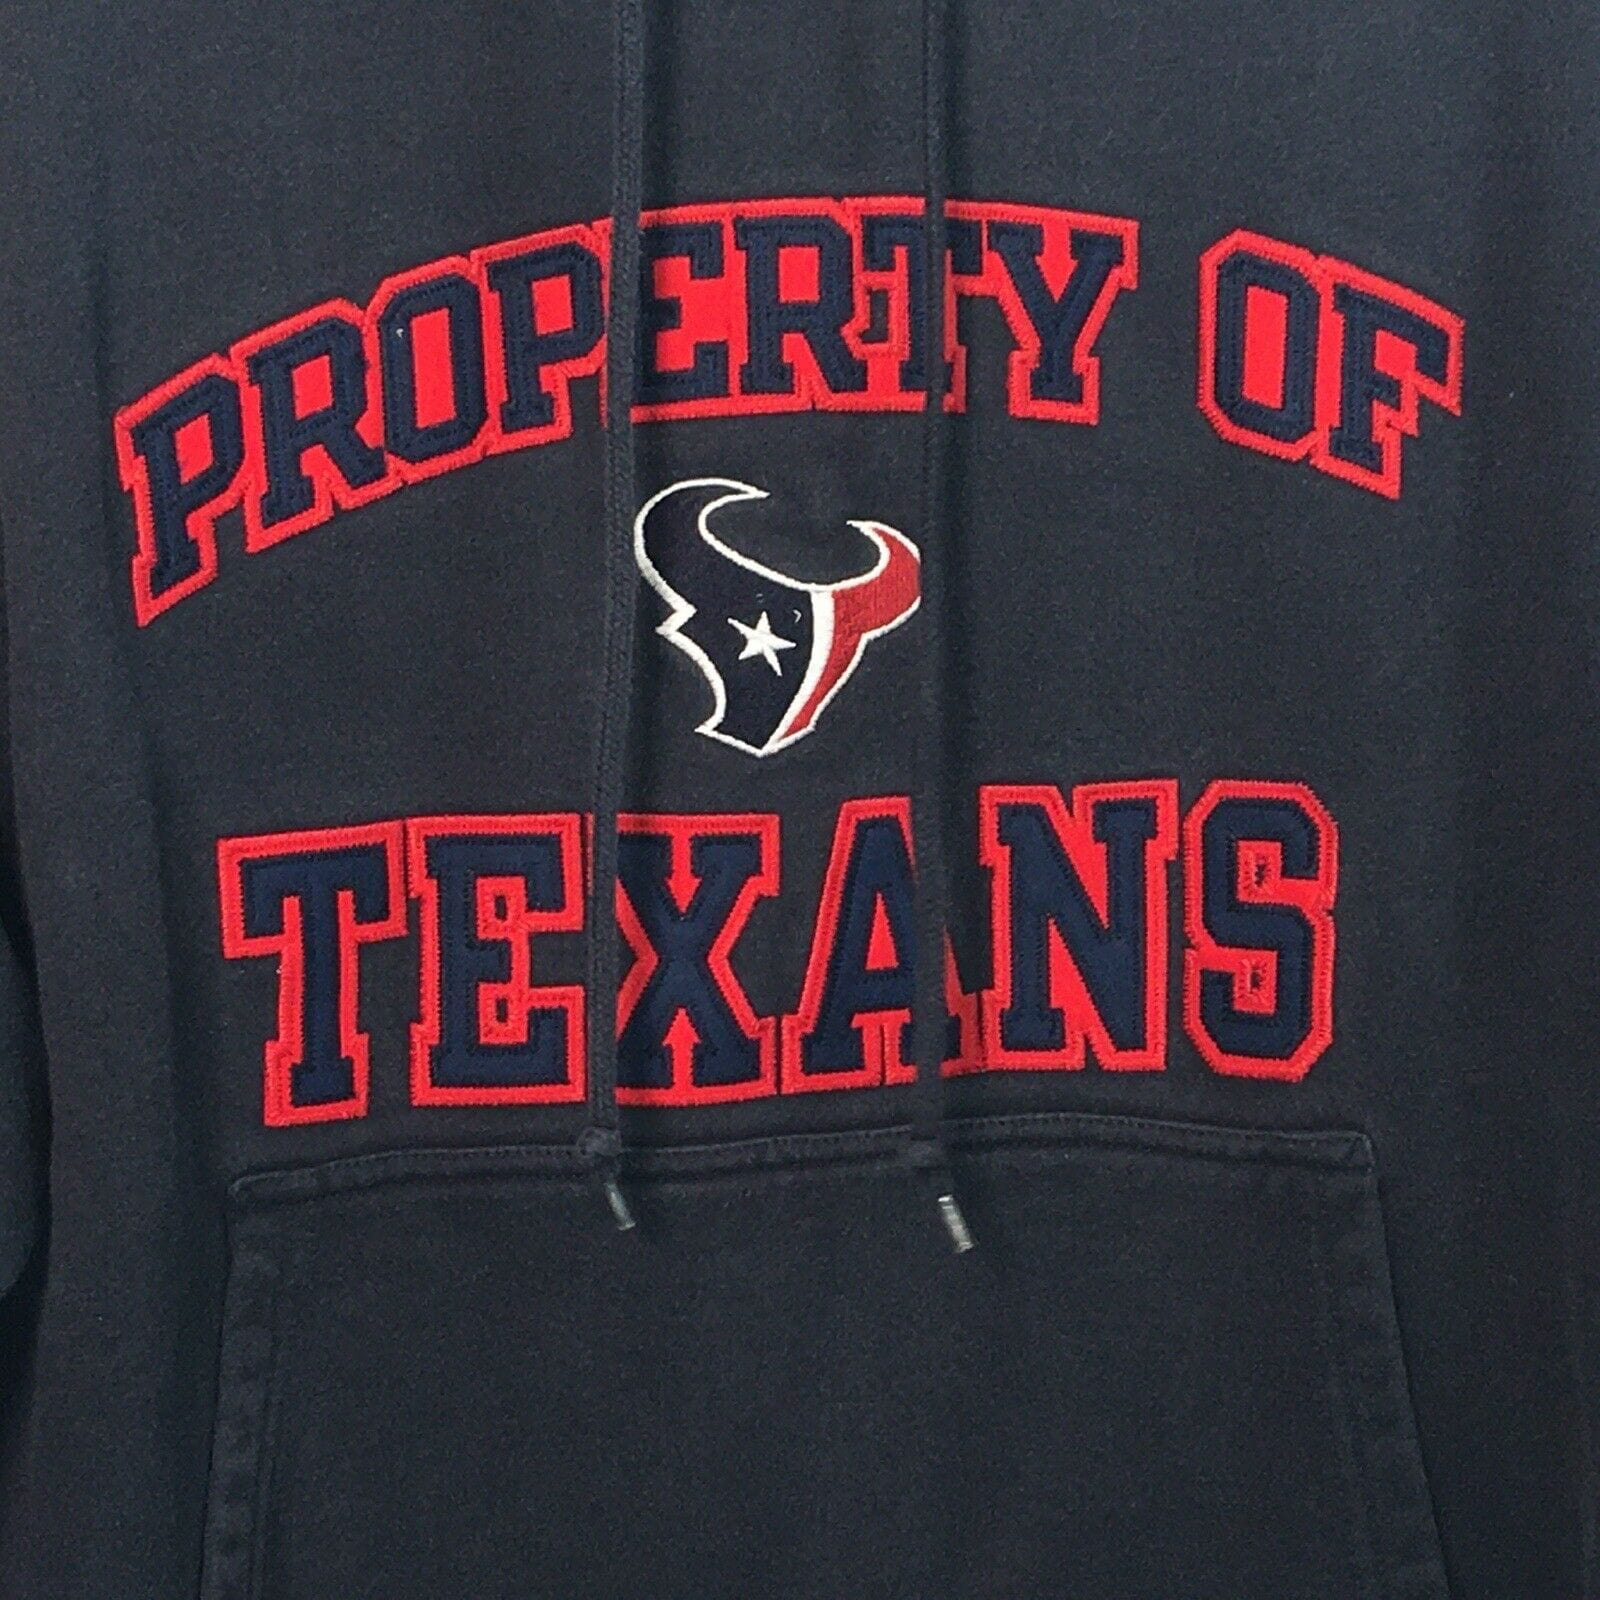 NFL Mens Houston Texans Hoodie Sweatshirt Size M Black Pullover L/S Reebok